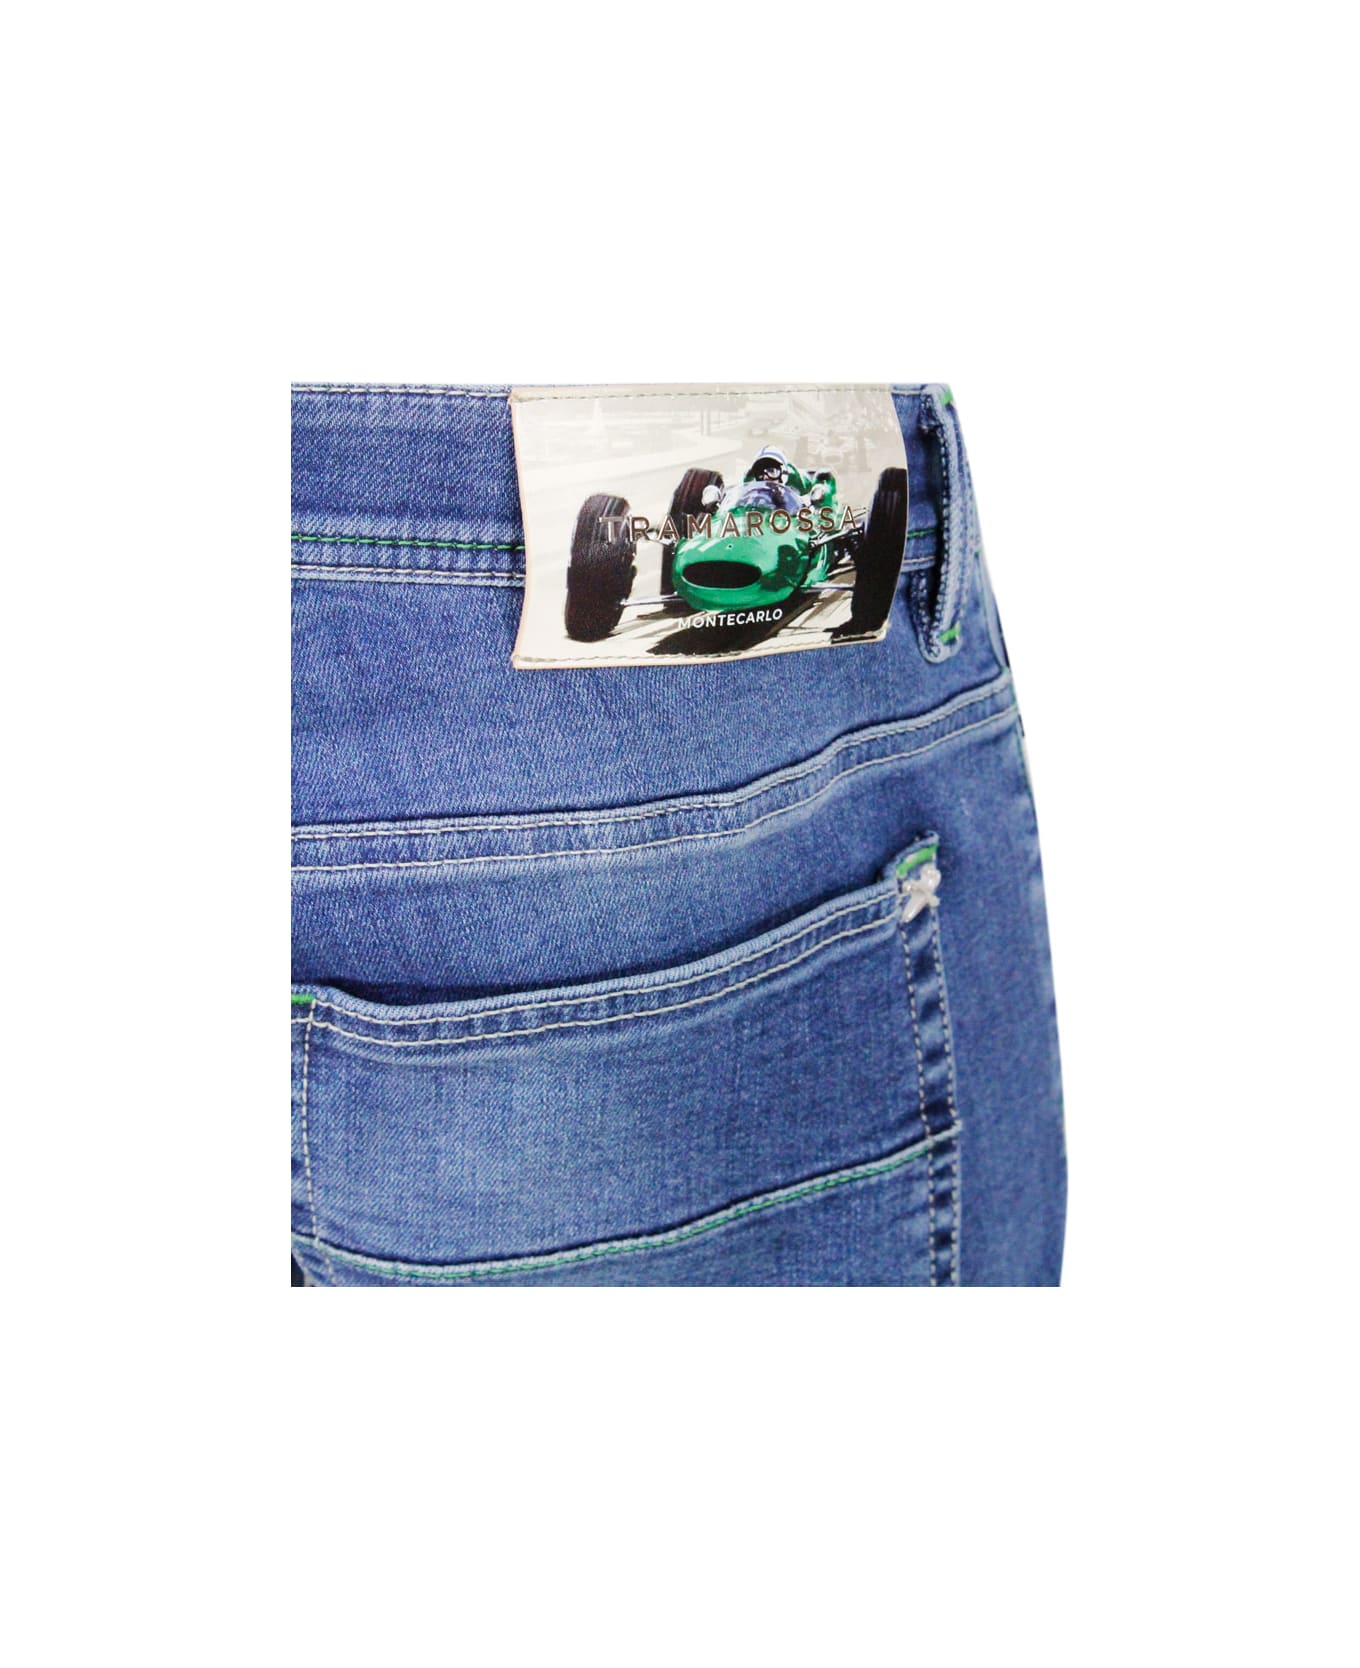 Sartoria Tramarossa Leonardo Zip Montecarlo Trousers In 5-pocket Super Stretch Selvedge Denim With Tone-on-tone Tailored Stitching And Leather Tag And Zip Closure - Denim